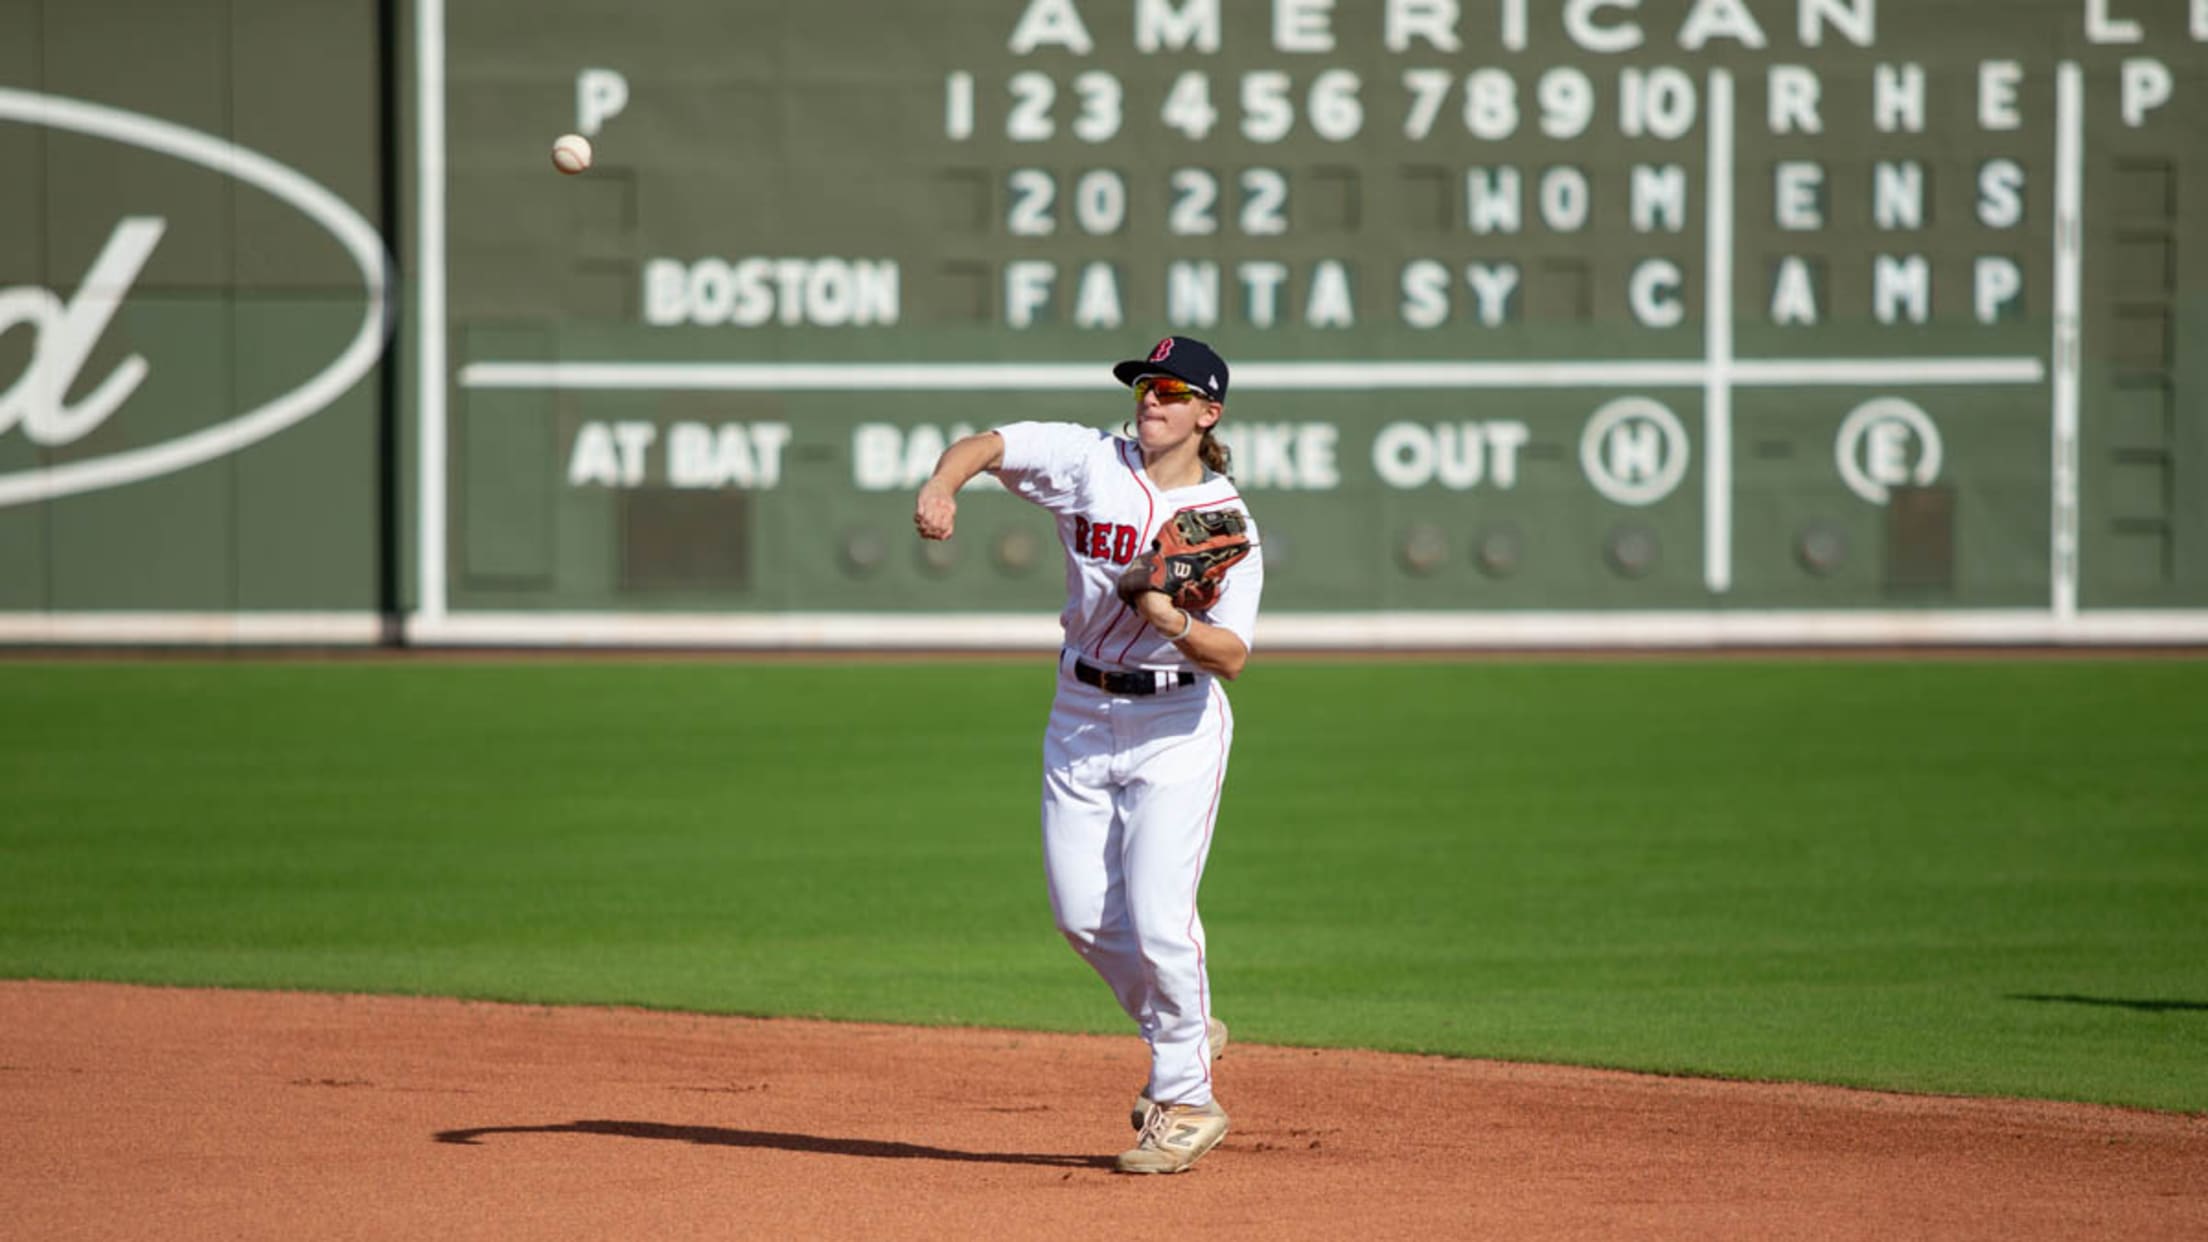 MLB Boston Red Sox Women's Replica Baseball Jersey